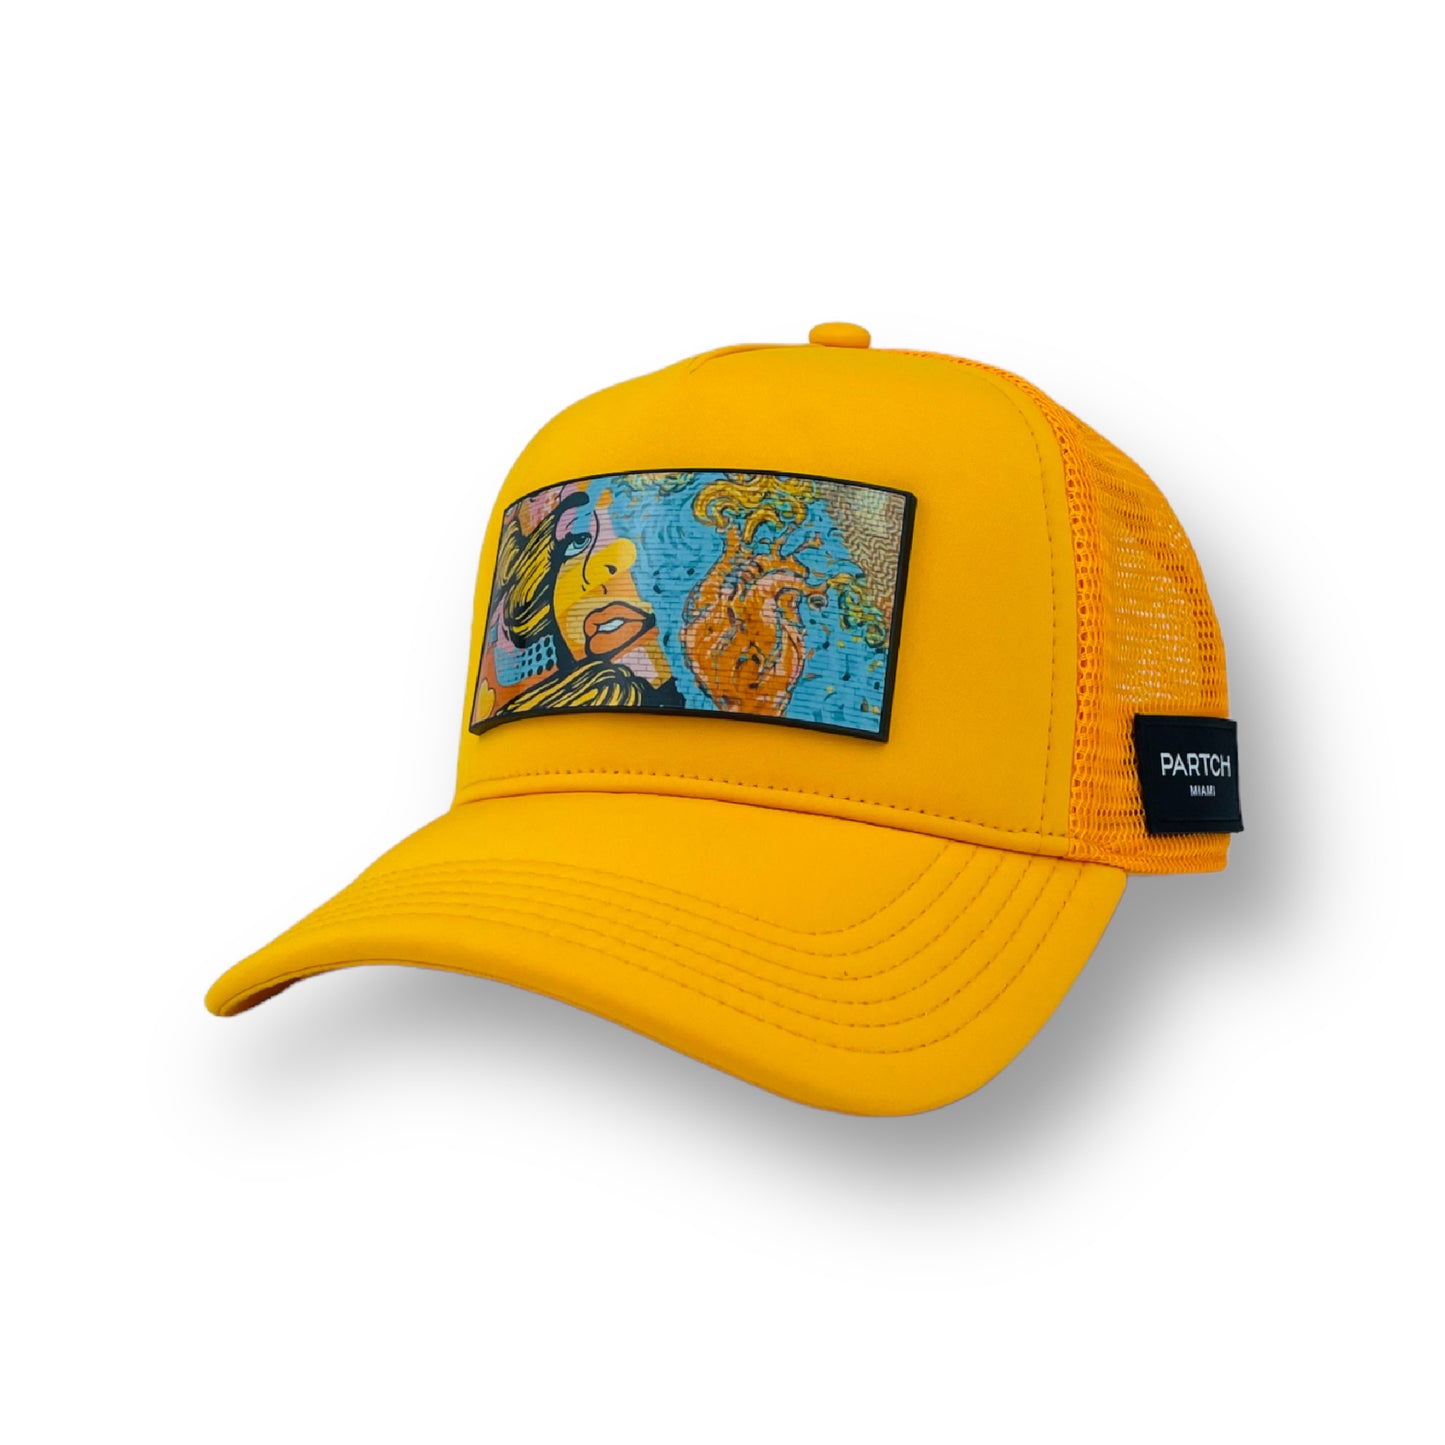 PARTCH Exsyt Art removable Trucker Hat Yellow